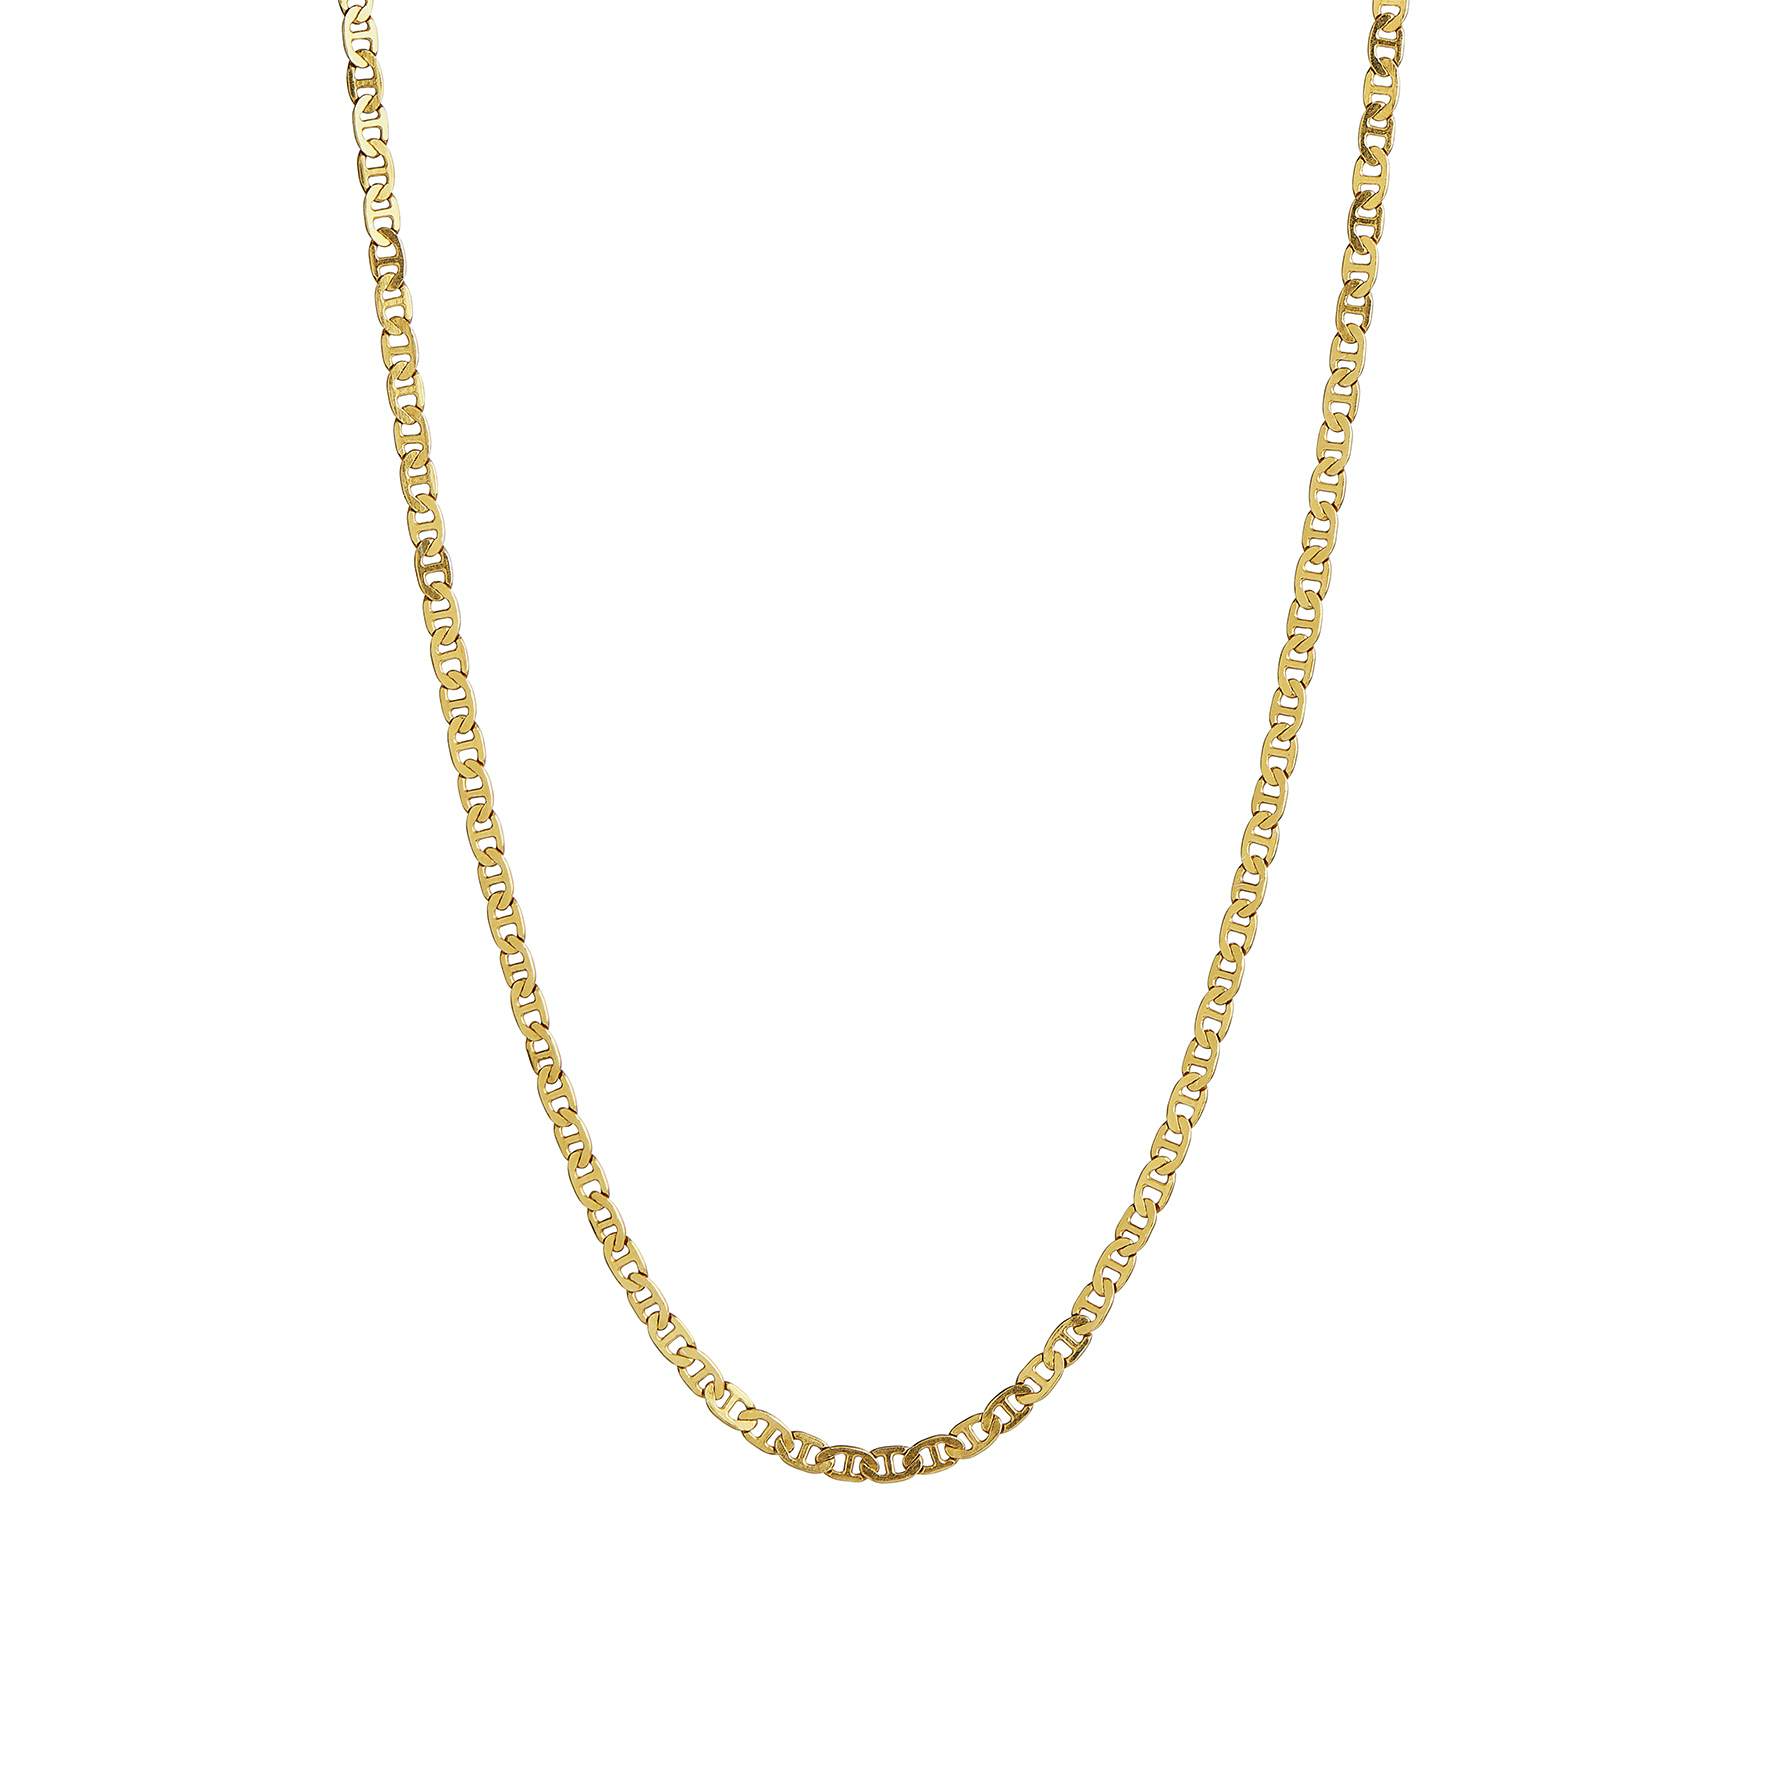 Petit Link Pendant Chain fra STINE A Jewelry i Forgylt-Sølv Sterling 925